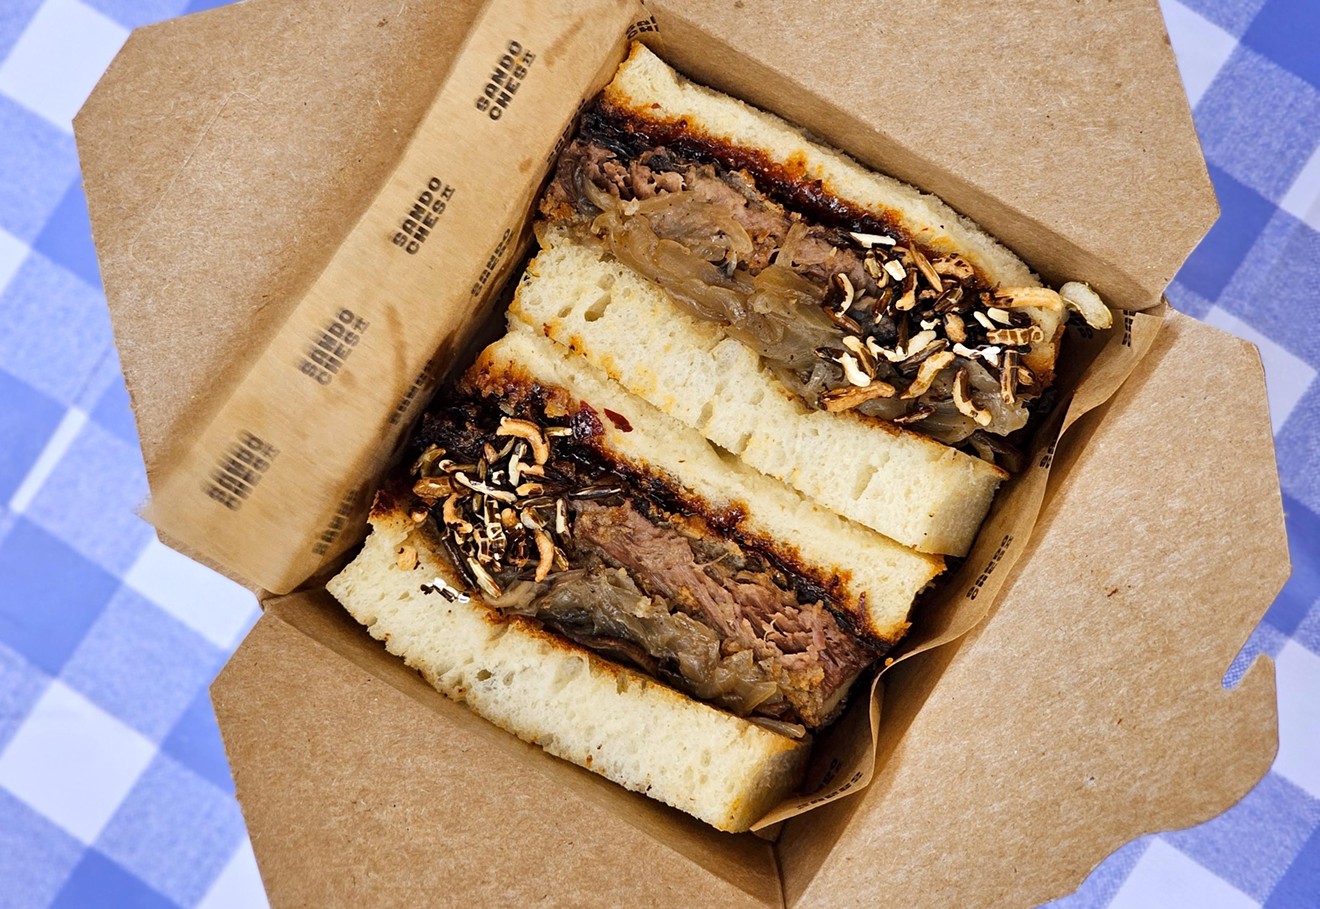 Sandoches offers Latin- and Japanese-inspired katsu sandwiches at Smorgasburg Miami.